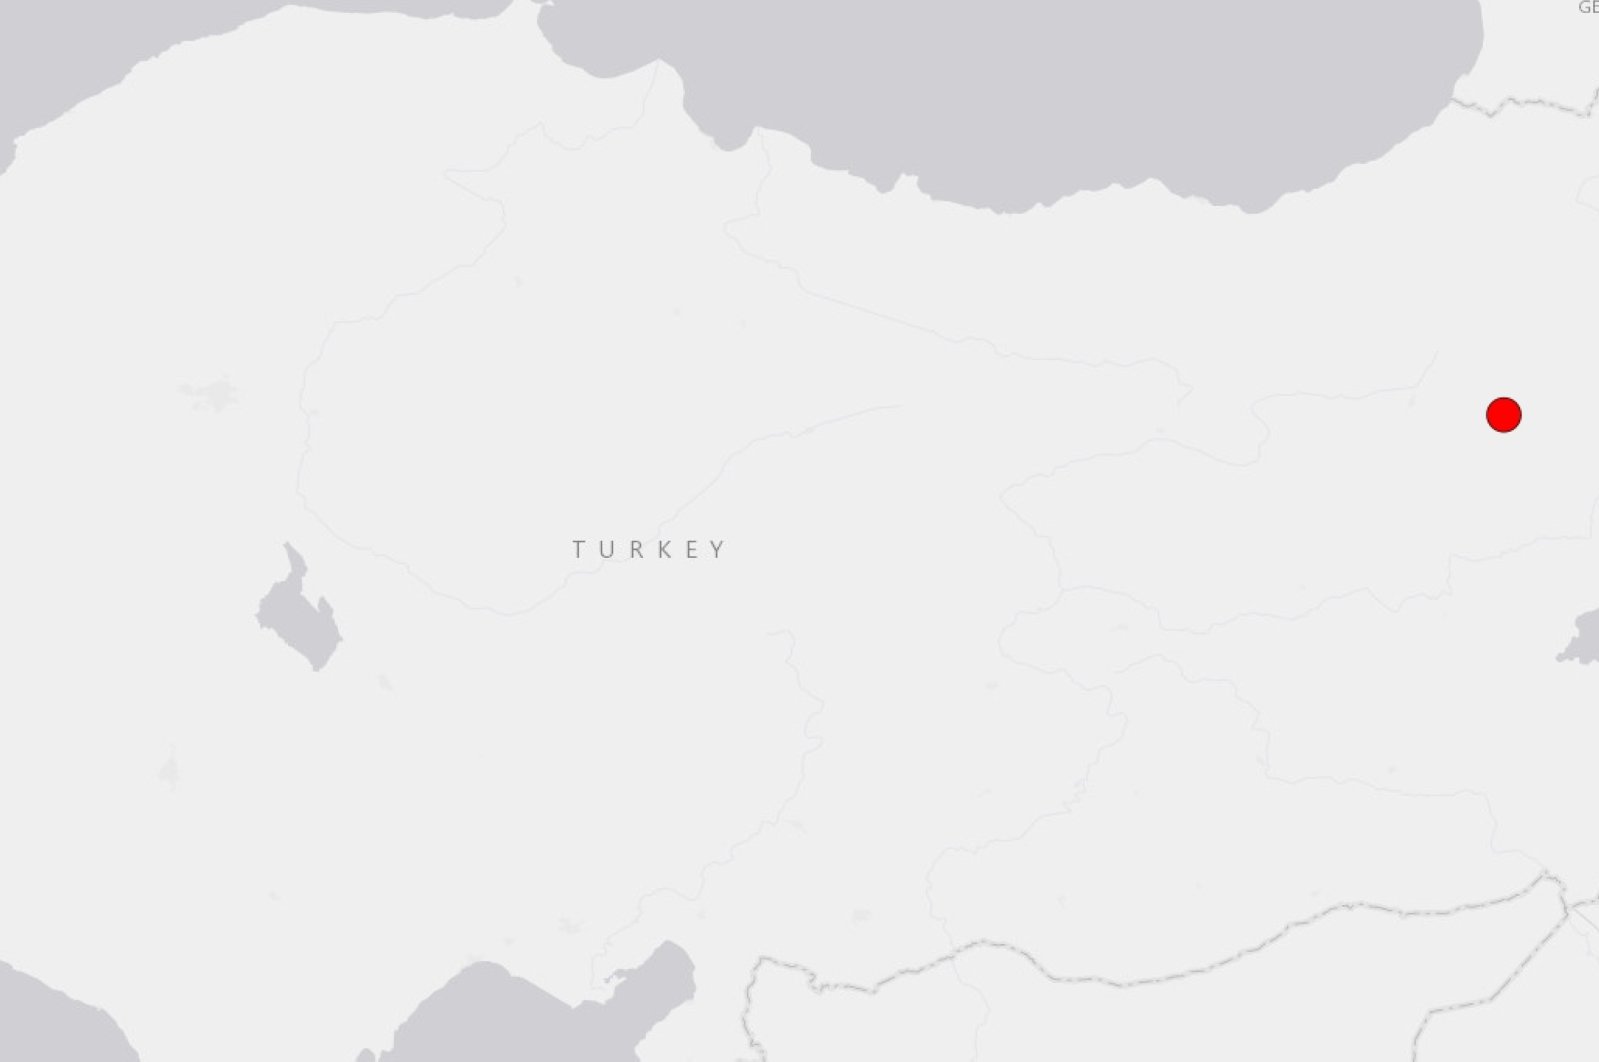 Gempa berkekuatan 5,1 SR mengguncang Erzurum, tidak ada korban jiwa